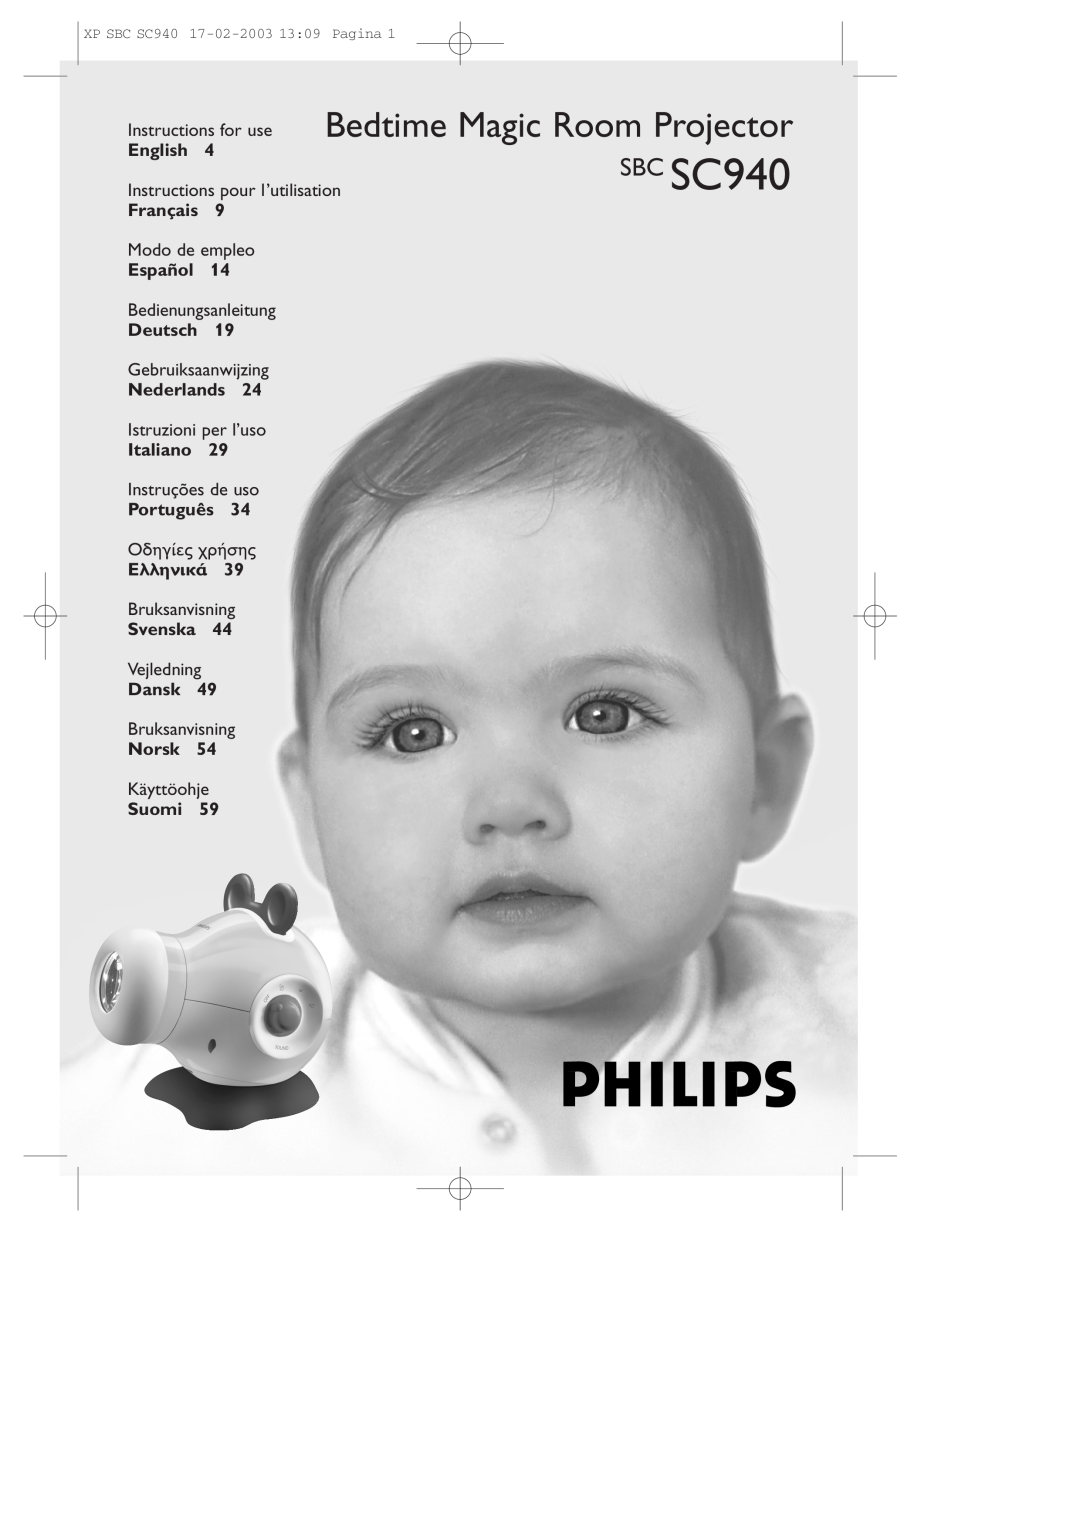 Philips manual SBC SC940, Instructions for use Bedtime Magic Room Projector, English, Français, Español, Deutsch, Dansk 